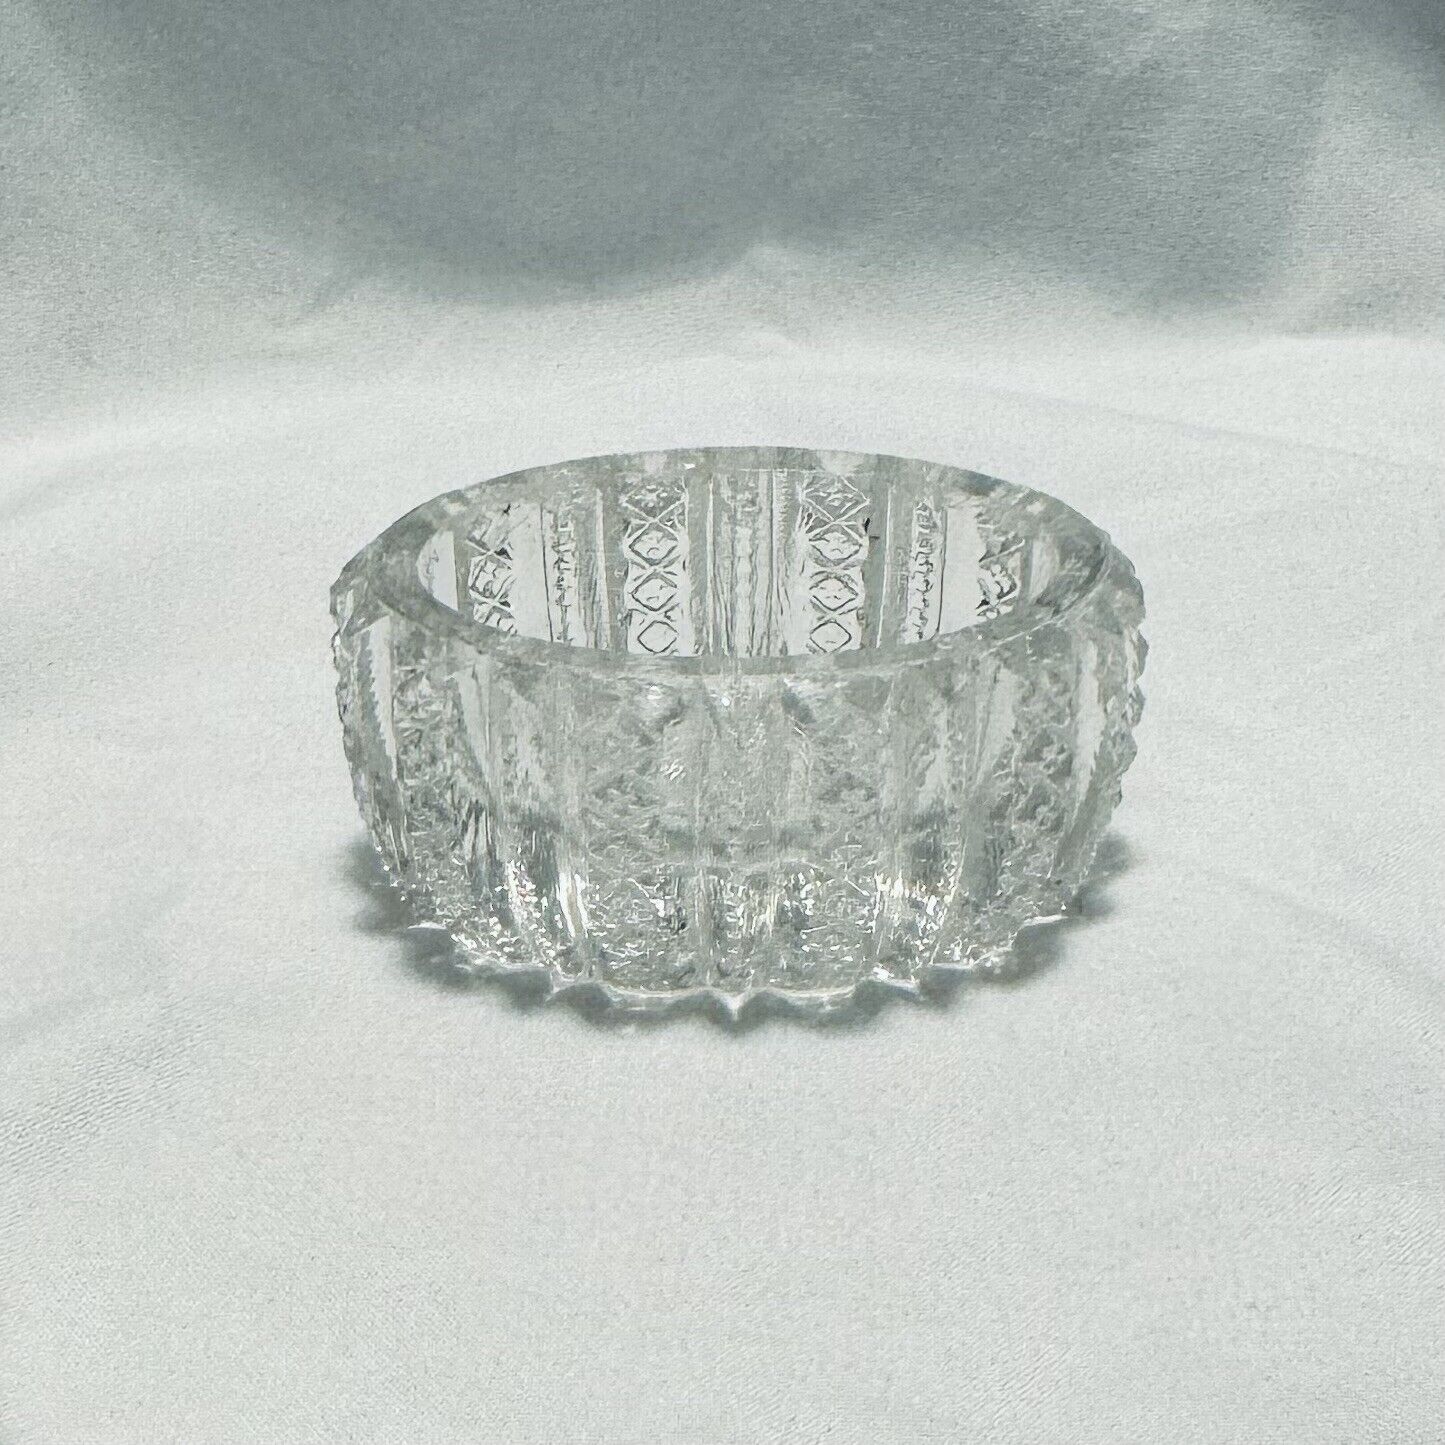 Duncan & Miller Vintage Art Deco Oval Cut Edged Crystal Glass Open Salt Cellar